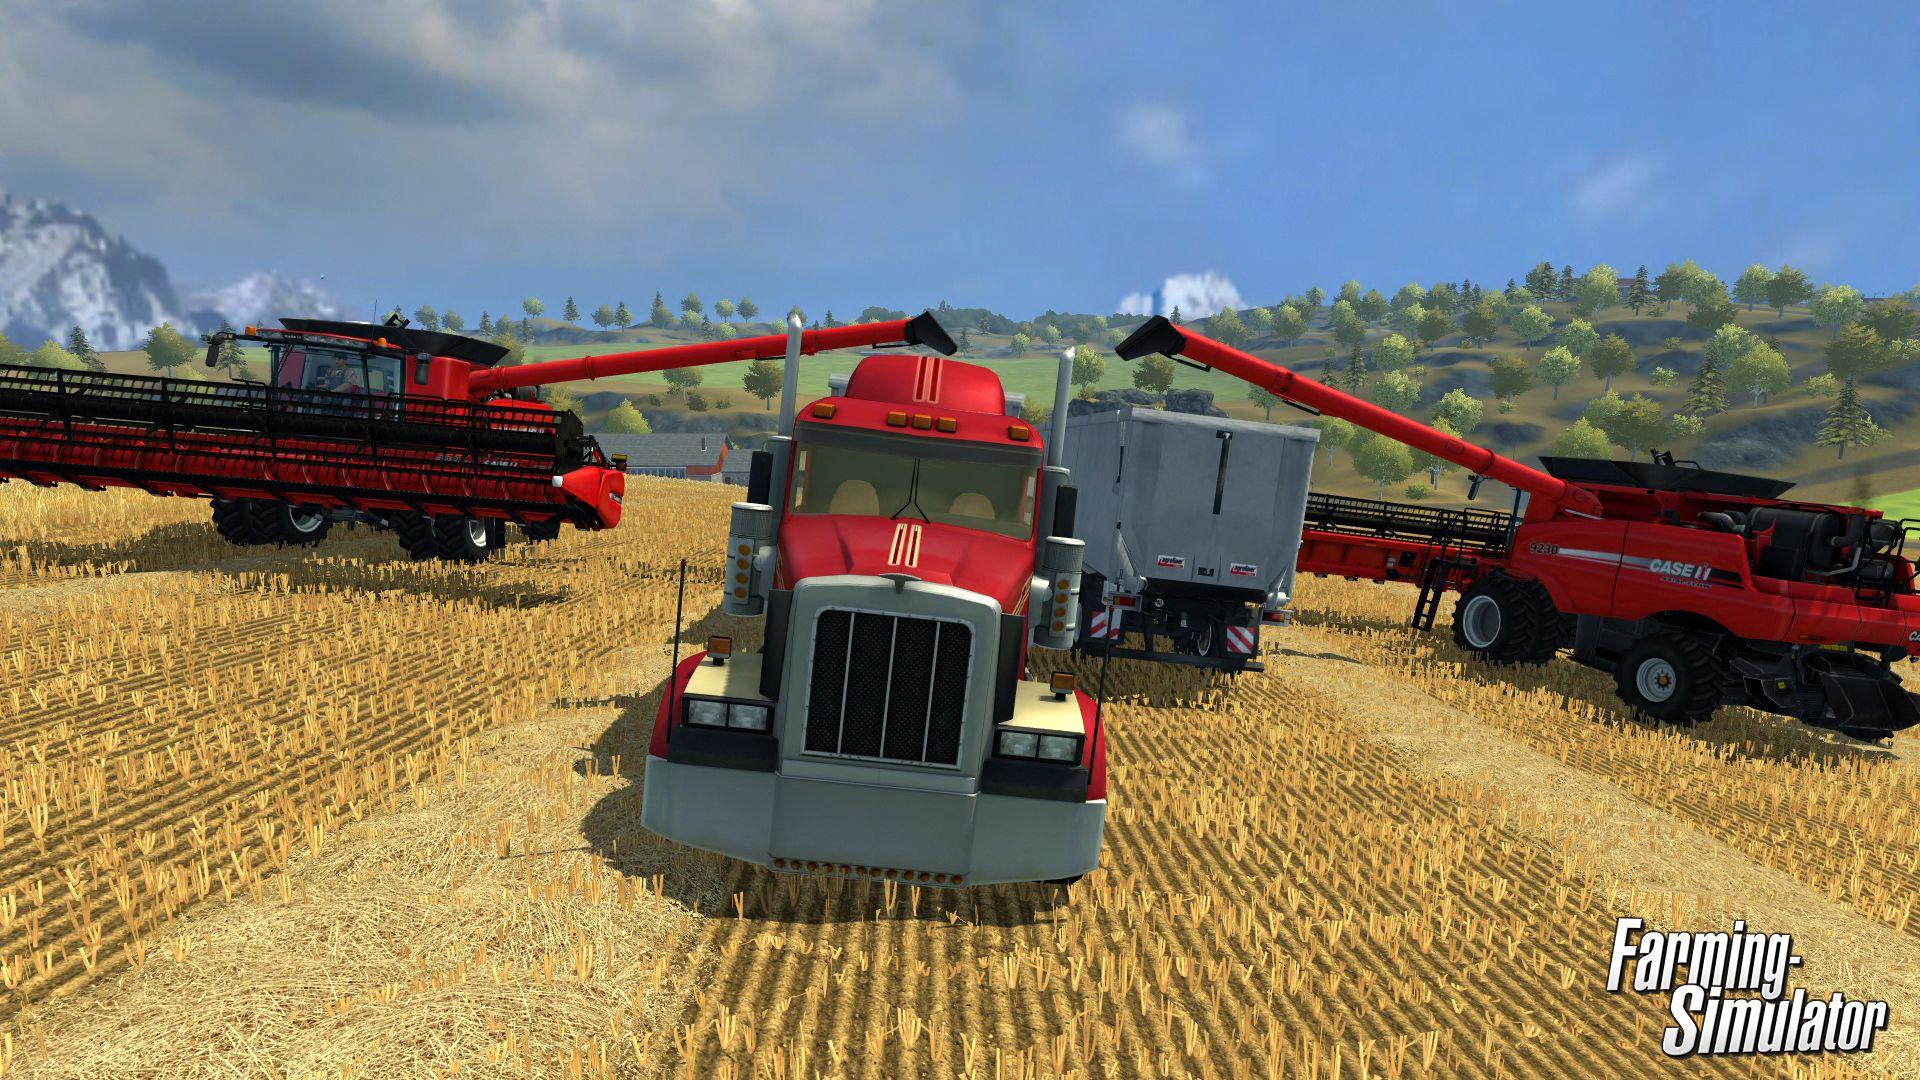 Farming Simulator Screenshots Game News, Videos, and File